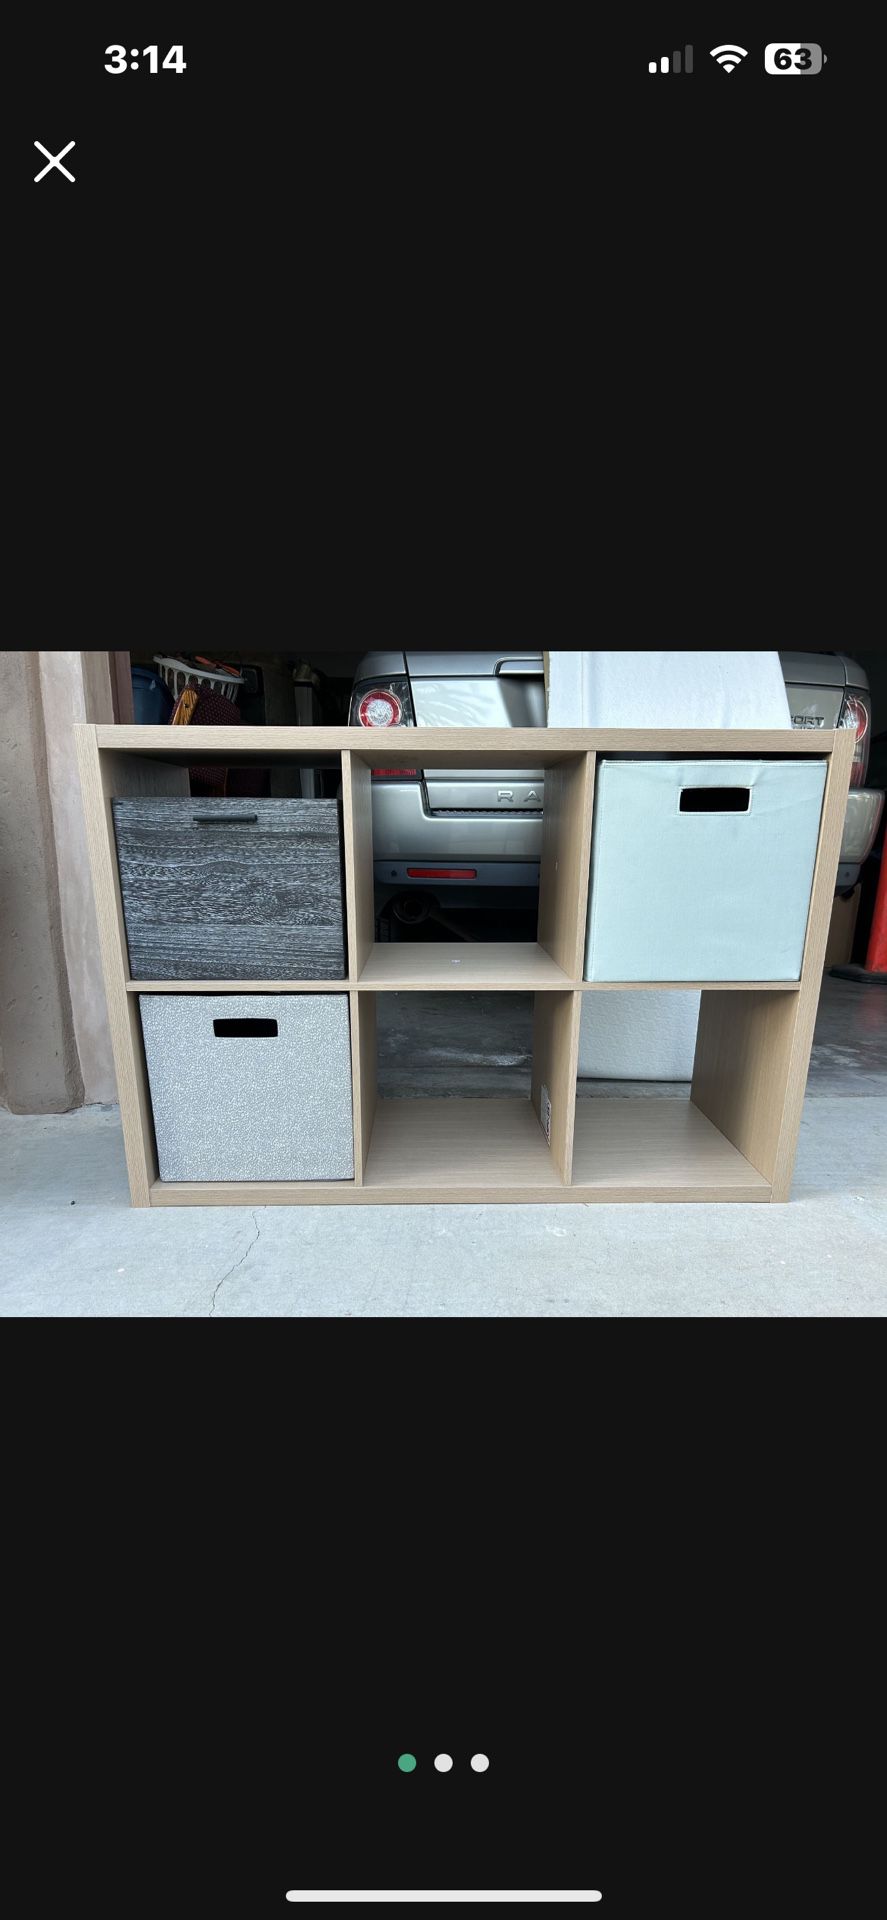 6 Cube Storage Bookshelf, Unit Shelf, Wooden Closet Cabinet, Organizer Rack in Study, Whitewash From IKEA Brand New Or Best Offers 